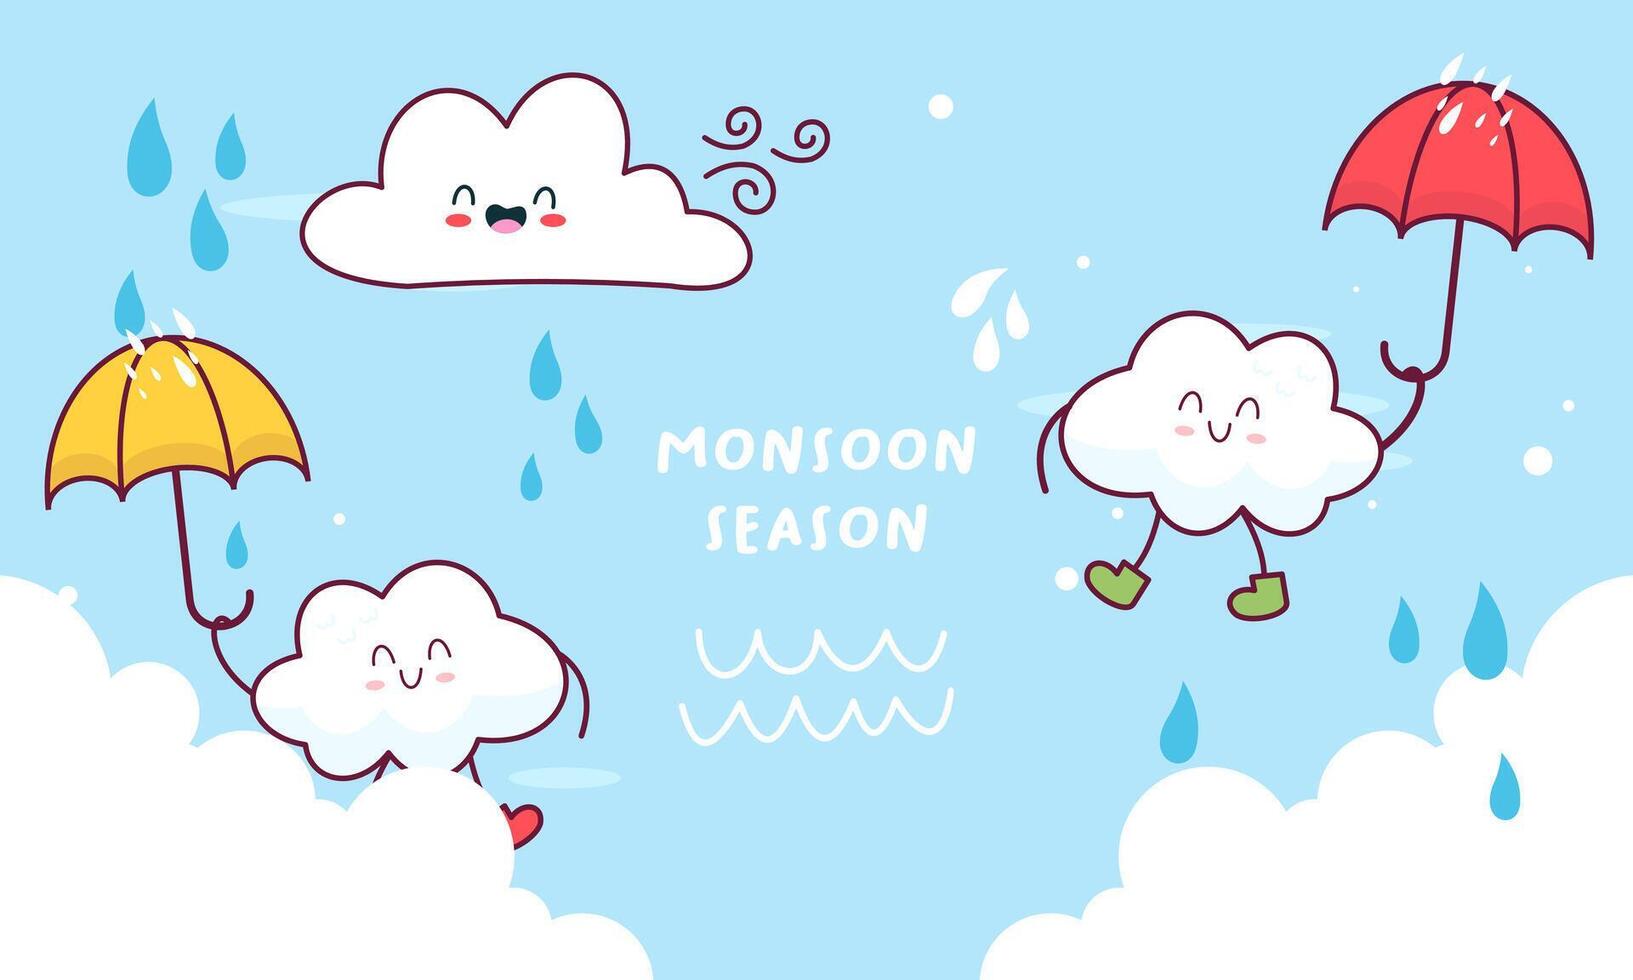 Monsoon season illustration with umbrellas vector